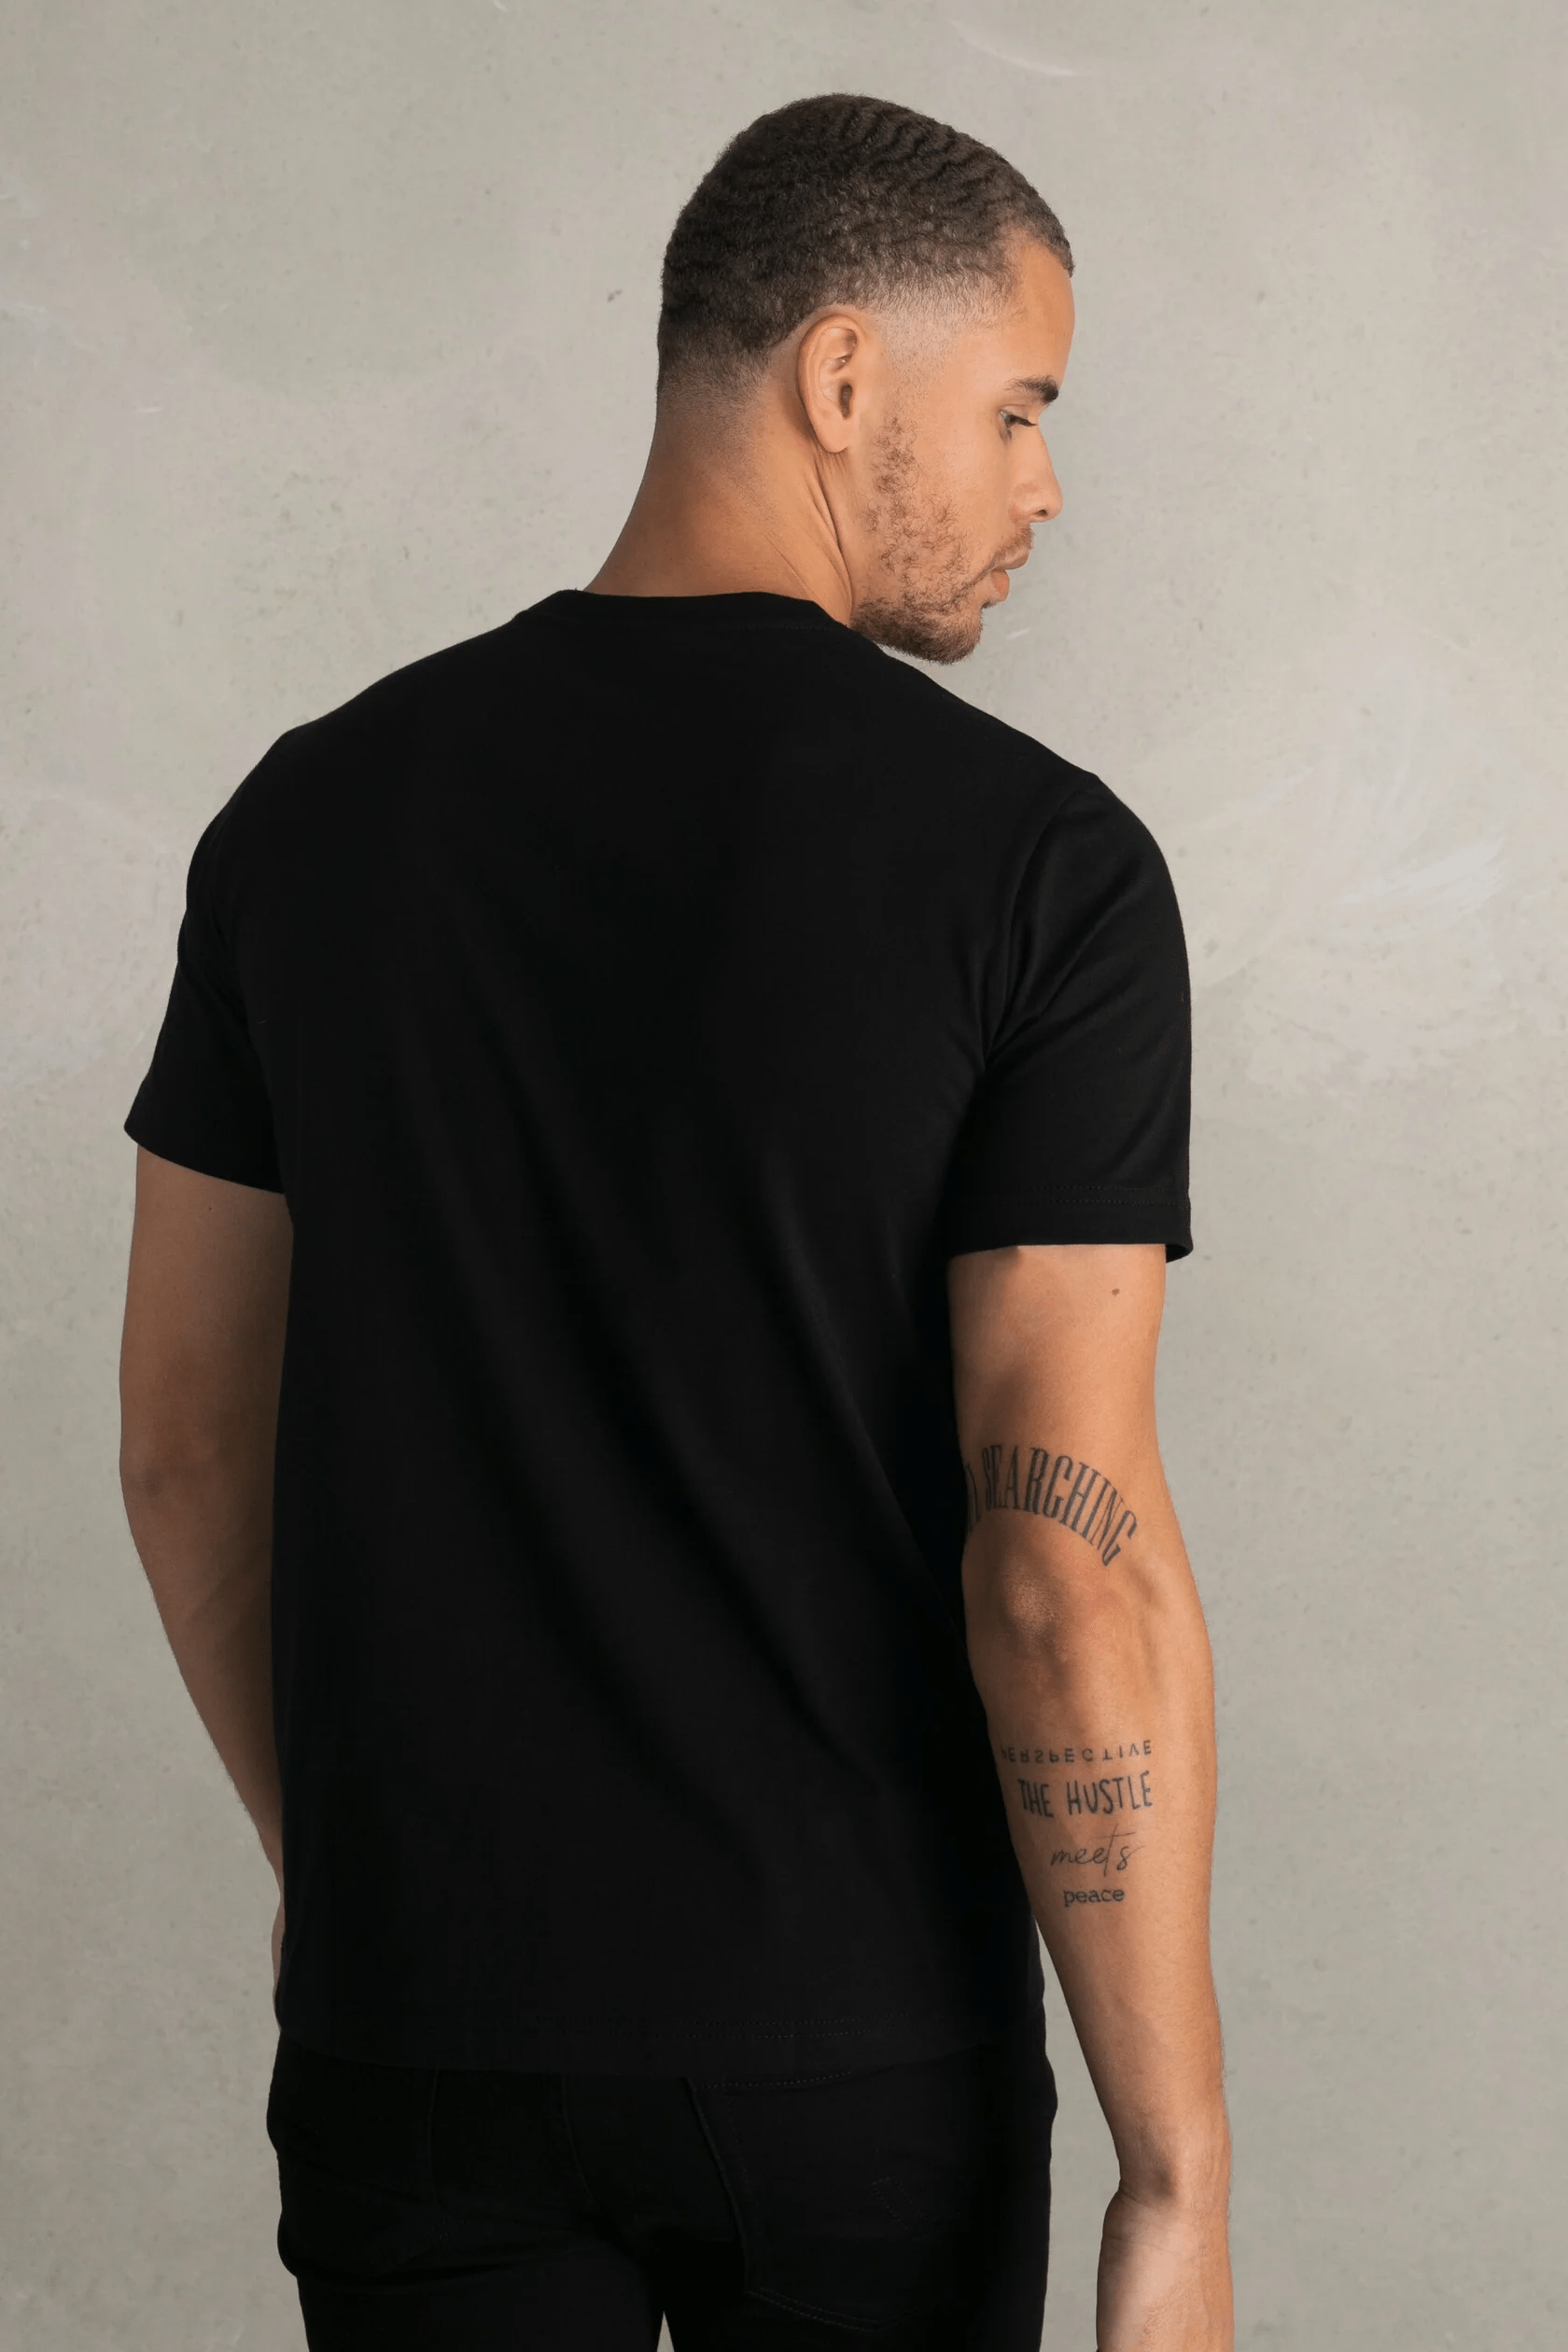 BALR./ボーラー/Brand Straight T-Shirt